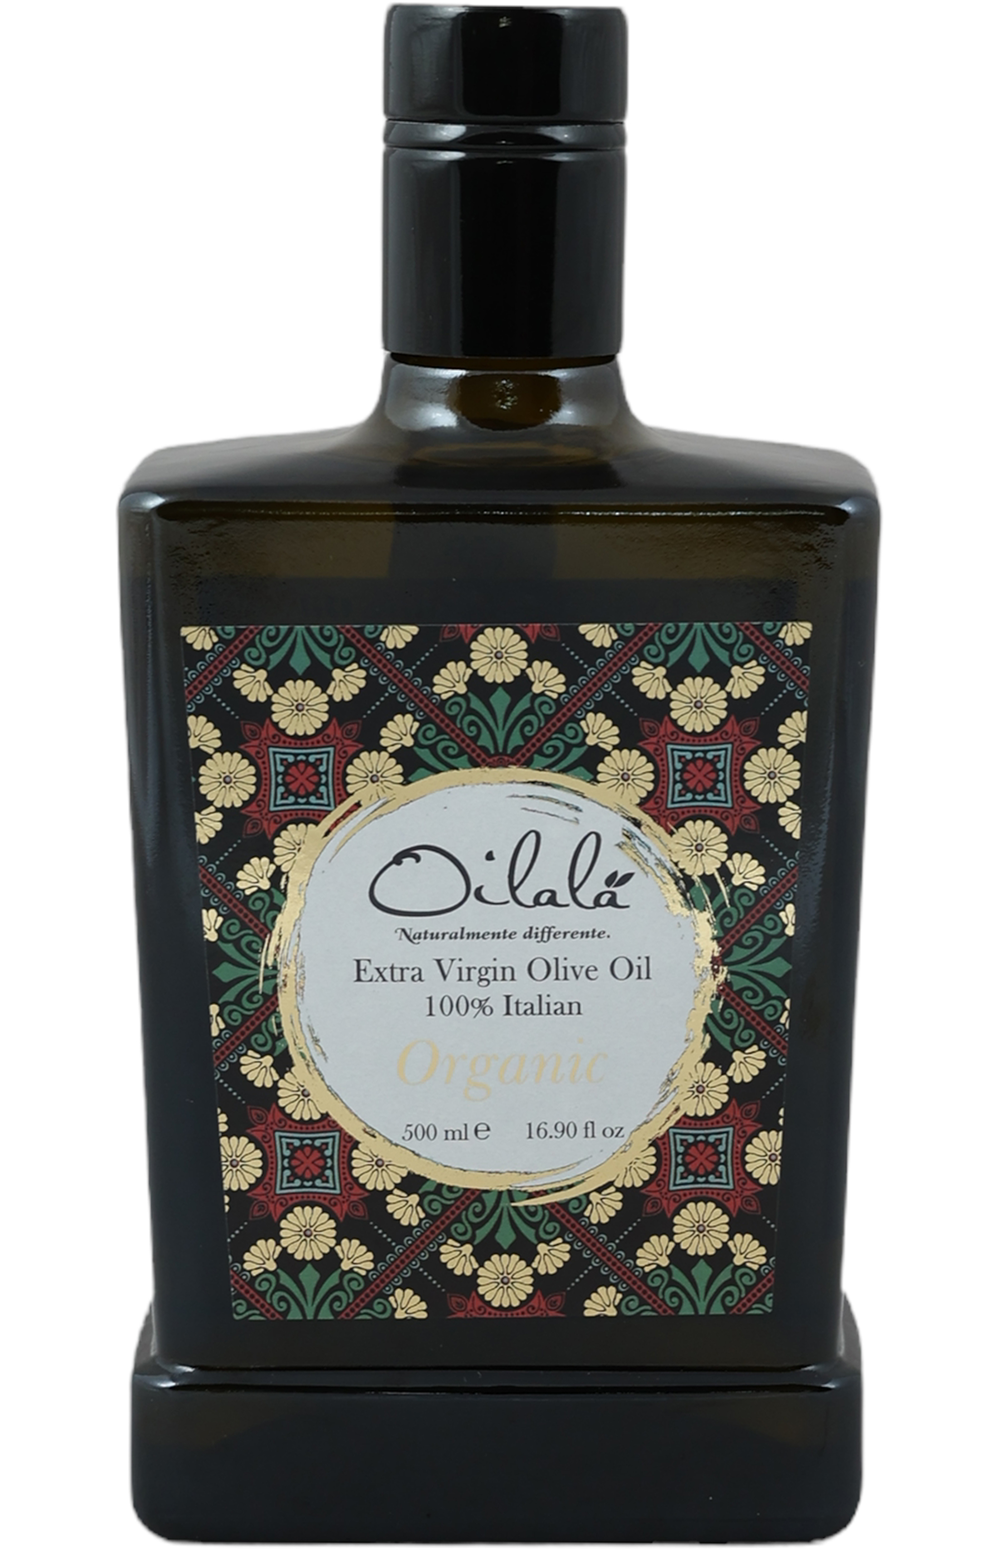 Oilala Extra Virgin Olive Oil